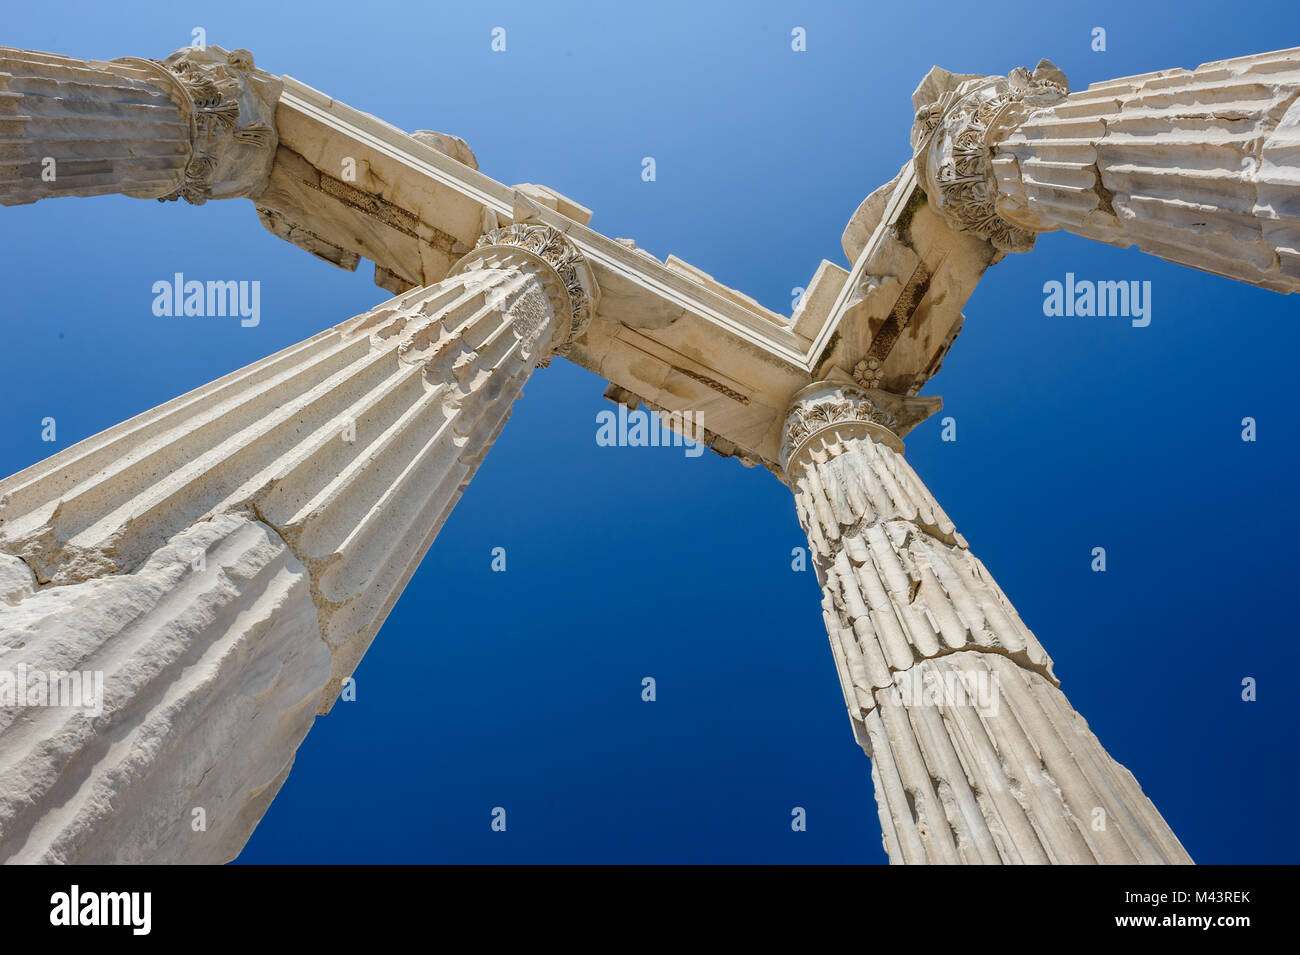 Temple of Trajan Stock Photo